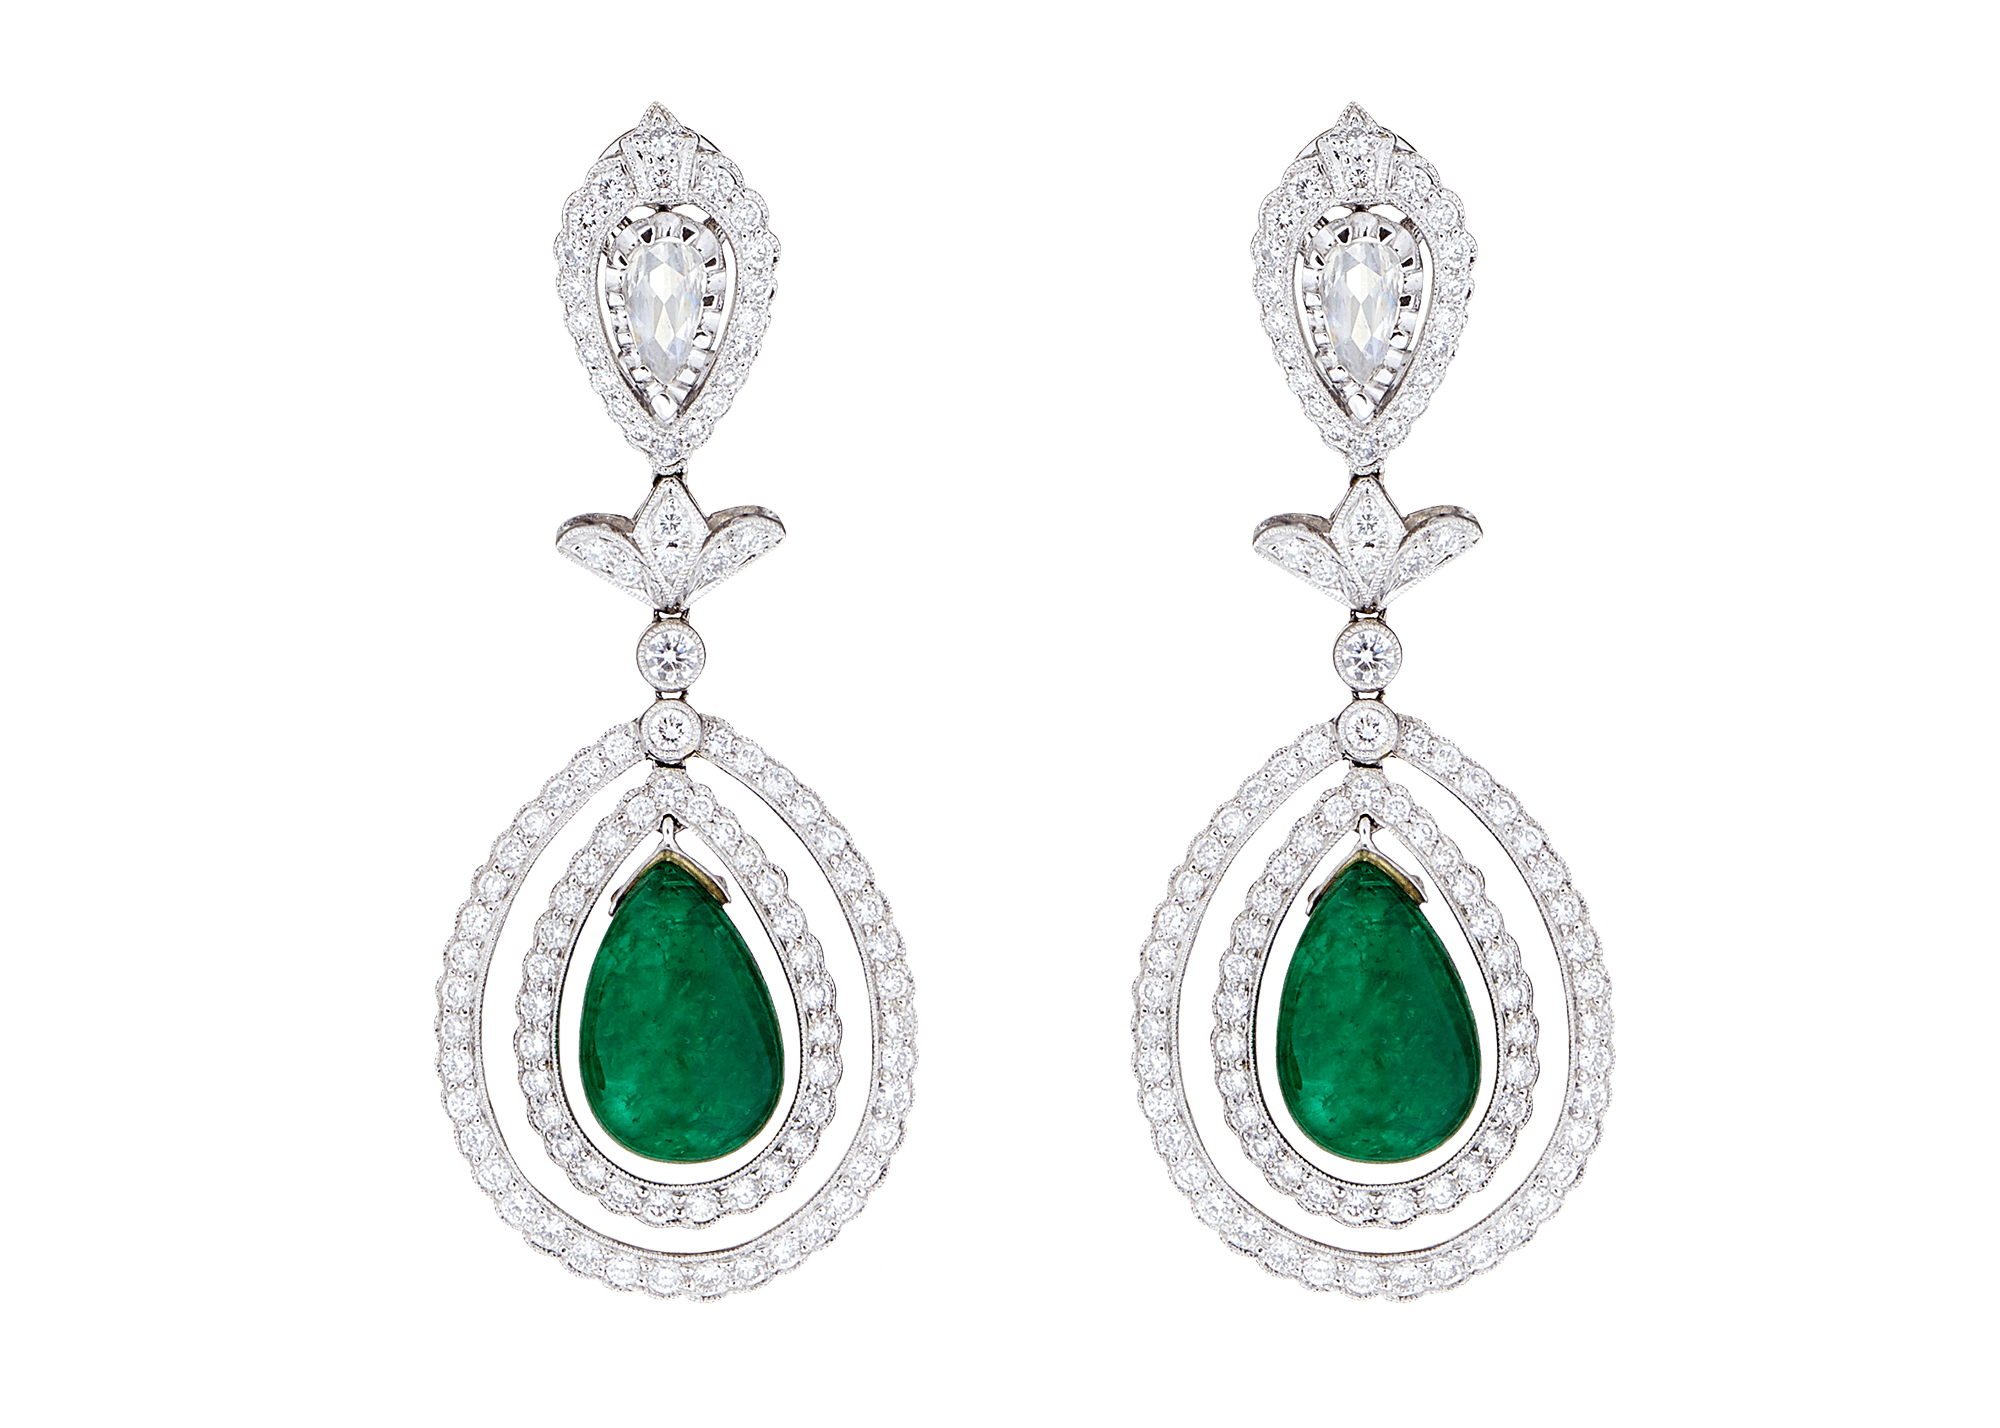 Emerald & Diamond Necklace/Earrings